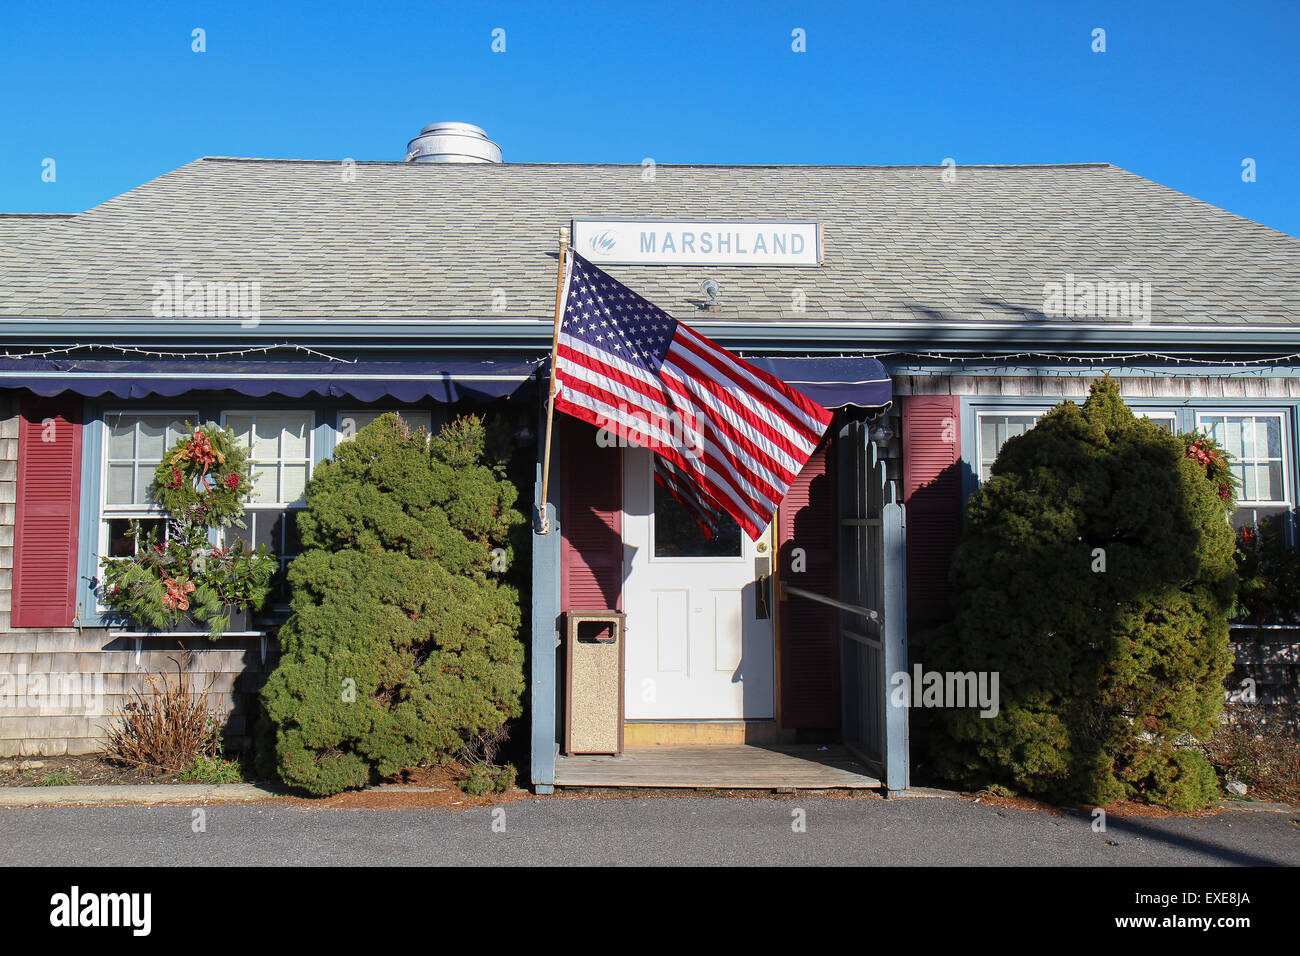 Marschland Restaurant, Sandwich, Cape Cod, Massachusetts, USA Stockfoto